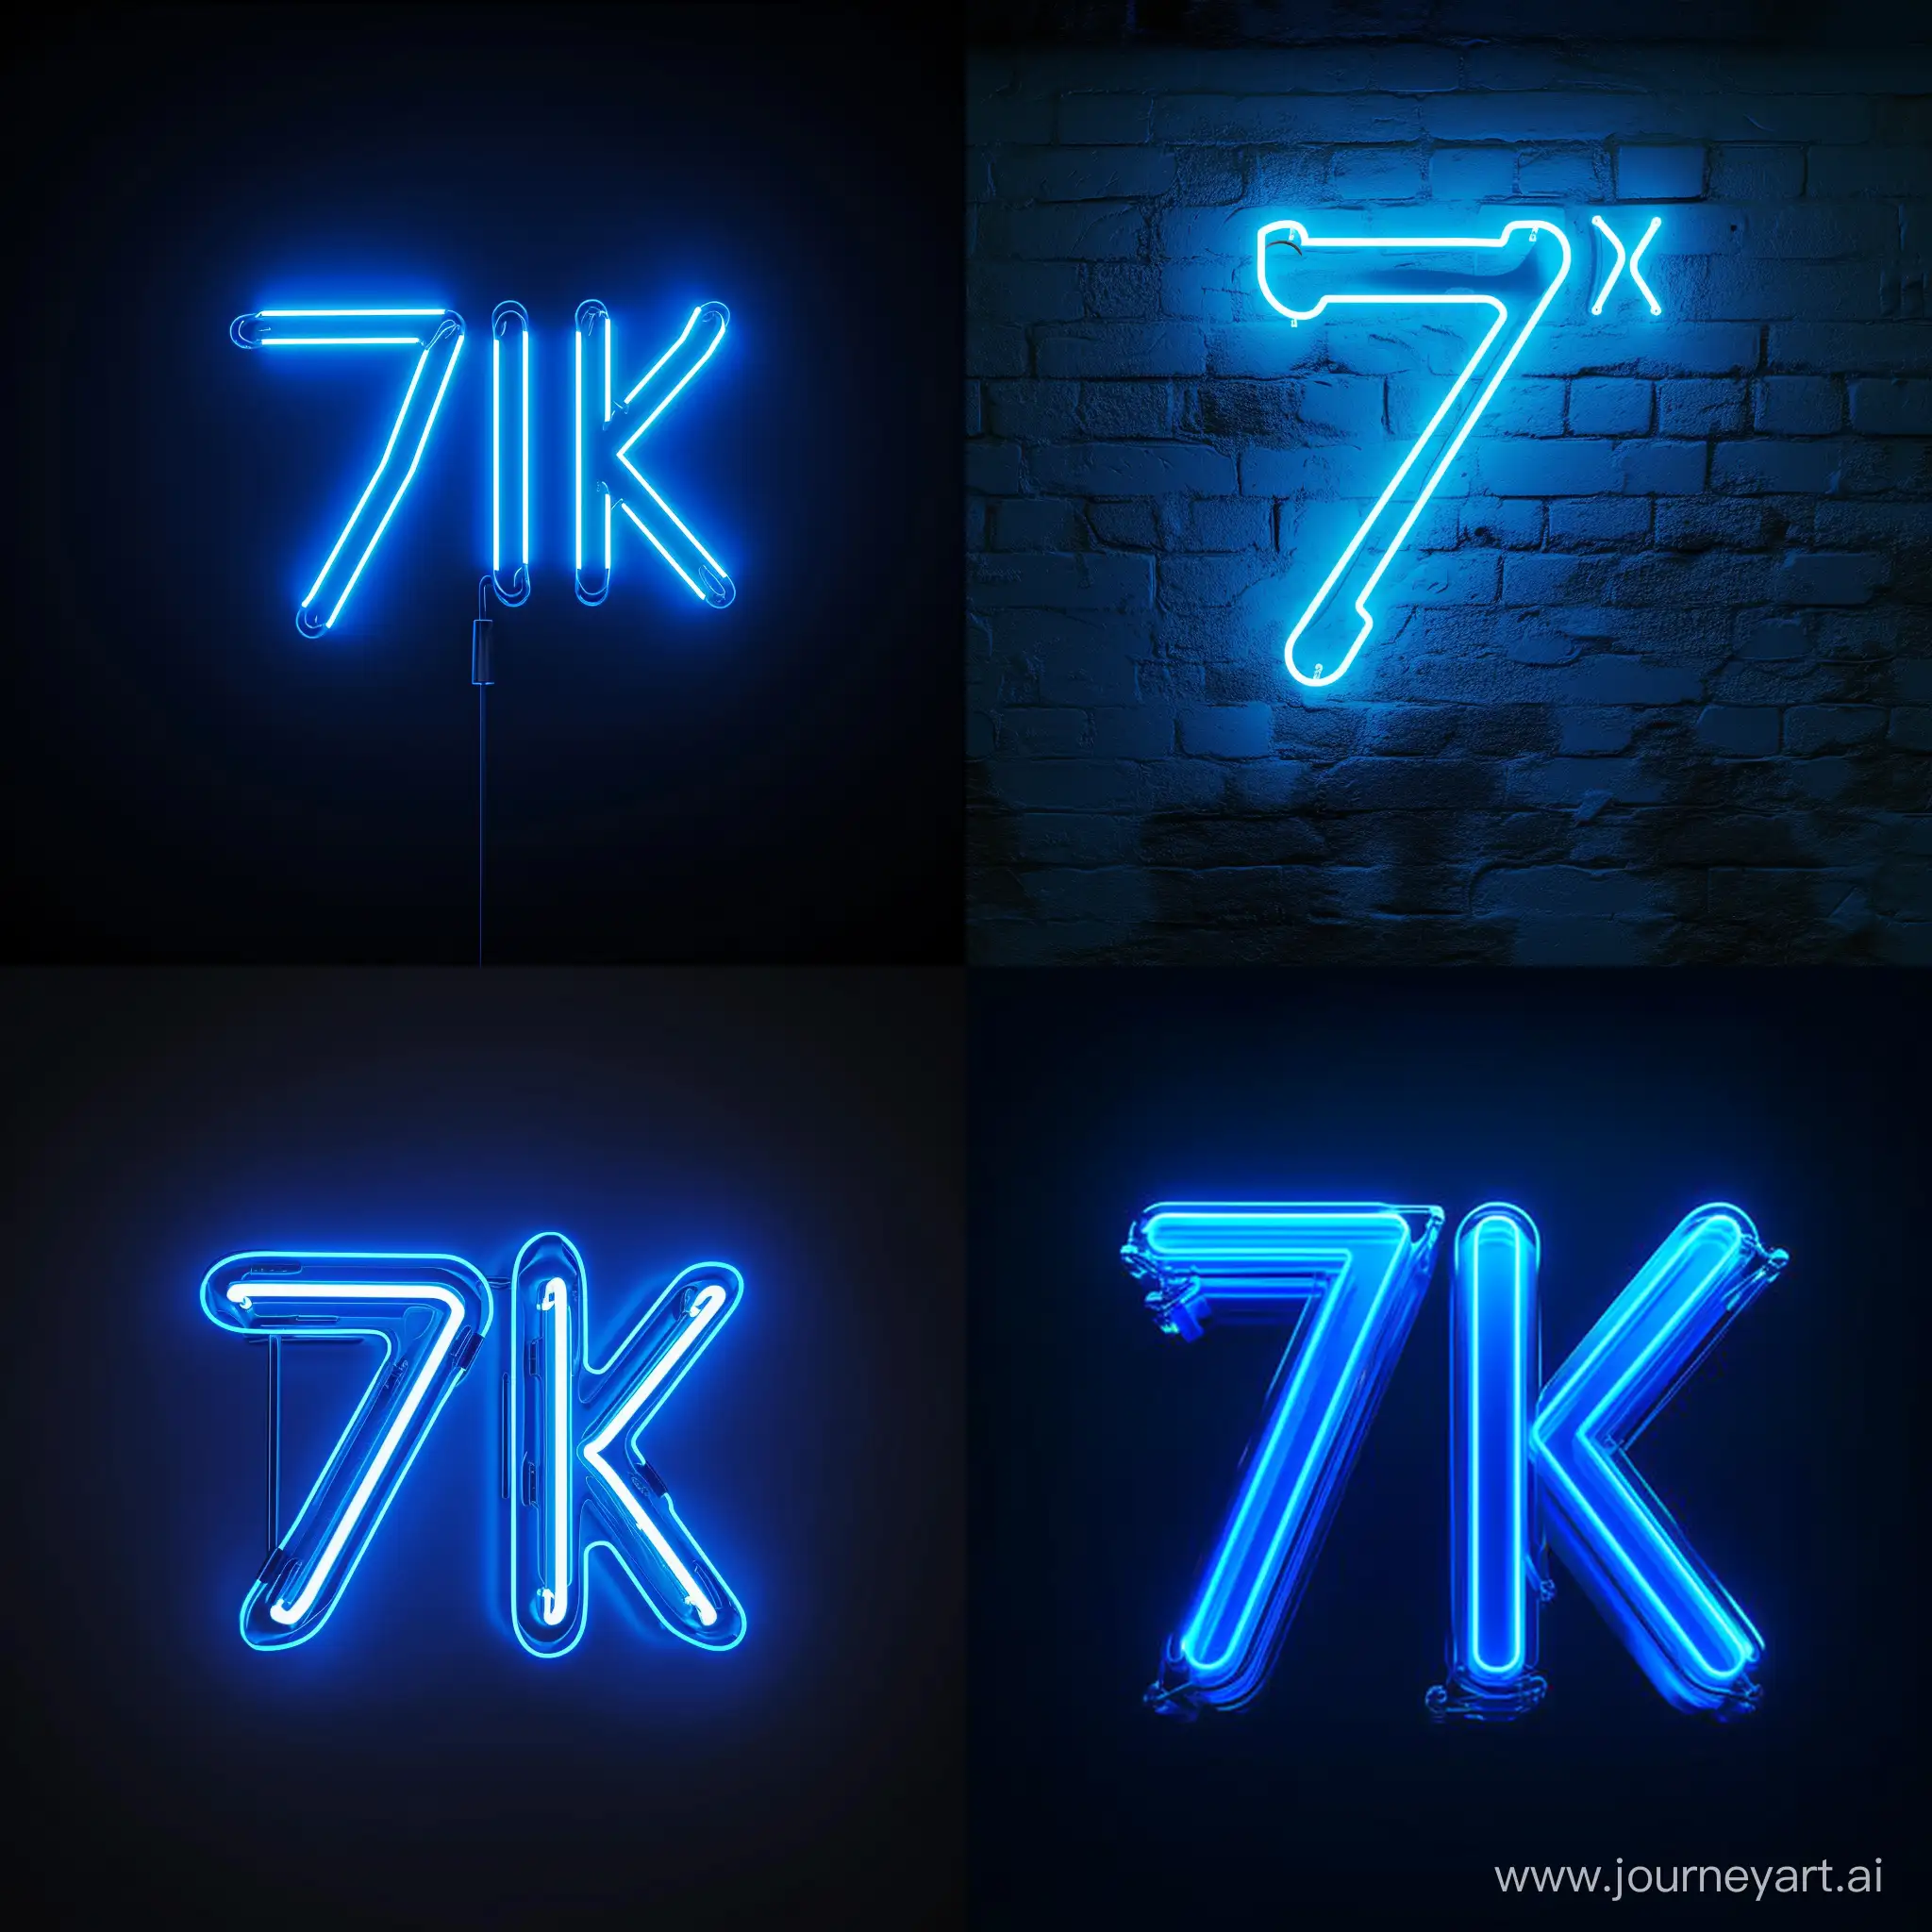 Stylish-Neon-Avatar-with-7K-Inscription-in-Minimalistic-Design